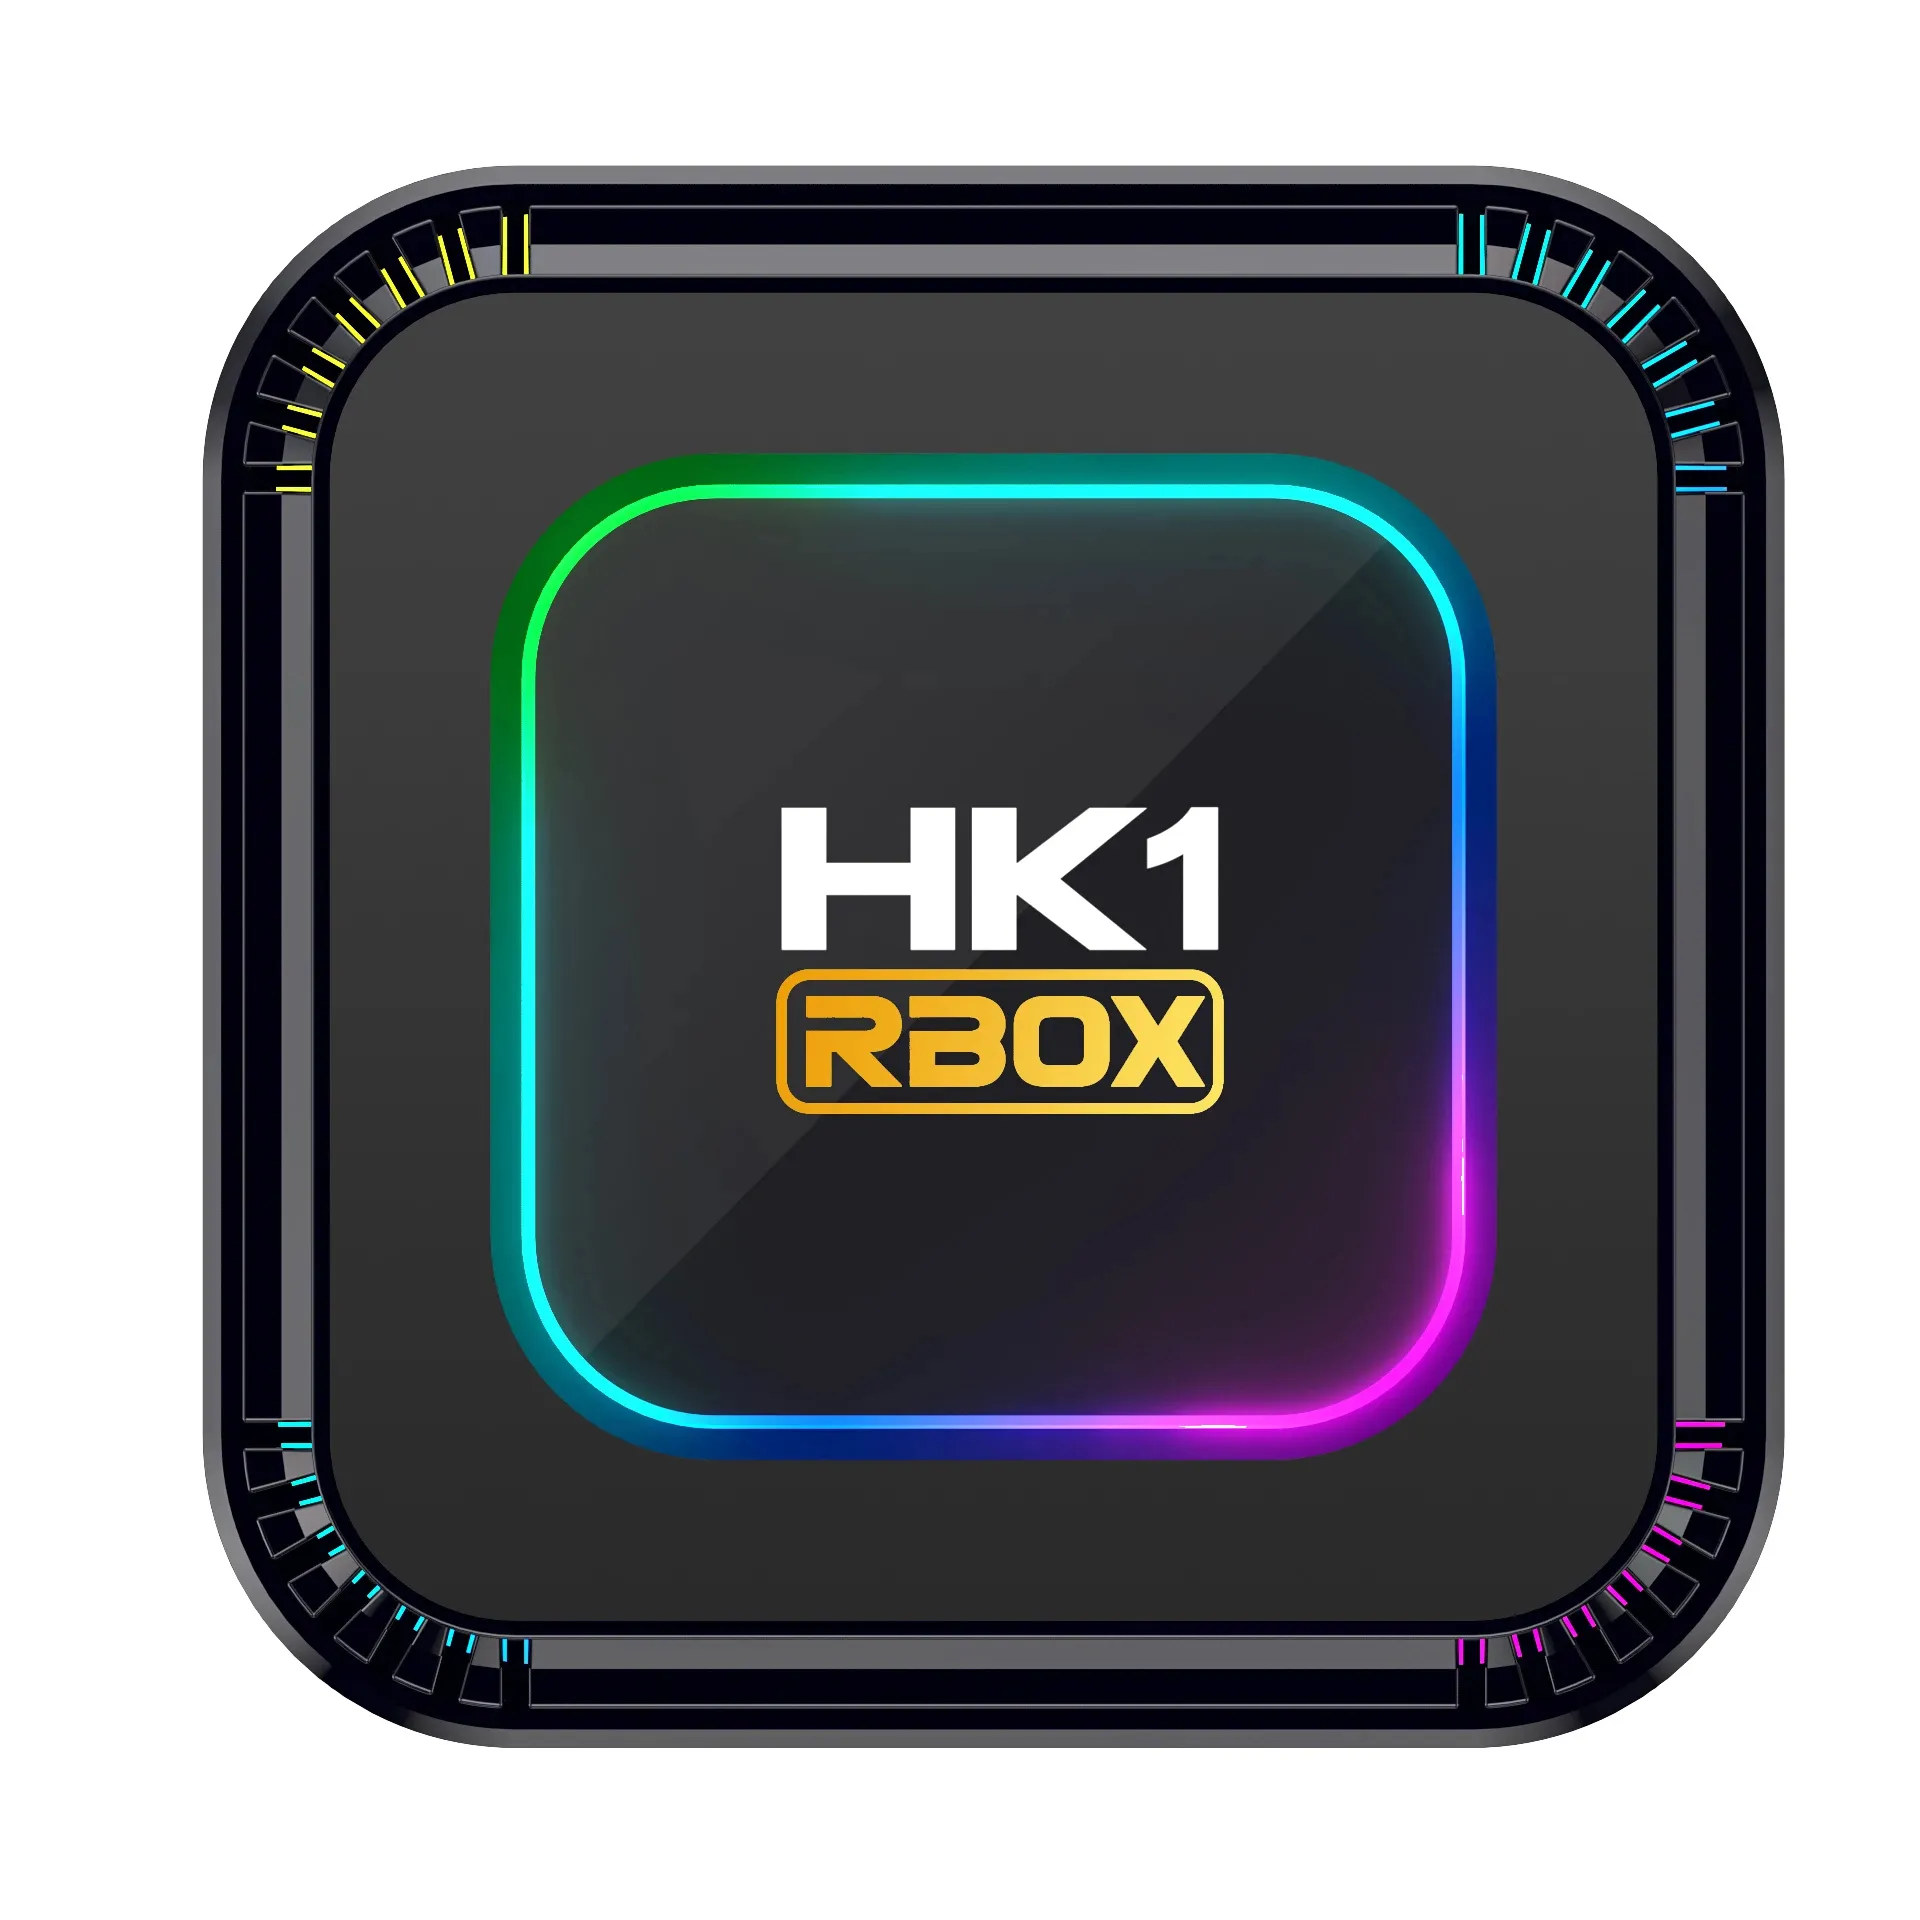 Kotak TV pintar HK1 RBOX K8 Android id13 lampu RGB WiFi6 Dual WiFi 100M LANHD Media Player BT5.0 TV Set Top BOx 8K HDR10 +